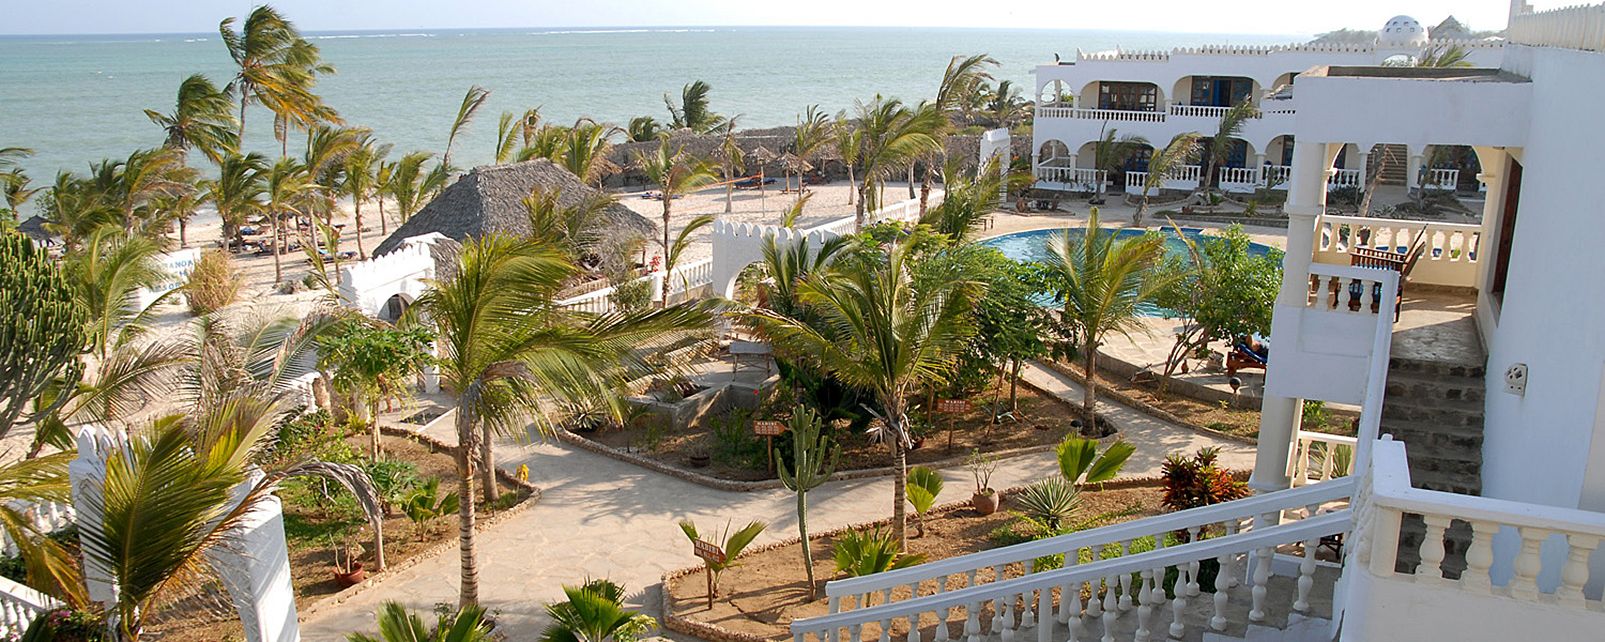  Ôclub Expérience Jacaranda Beach Resort